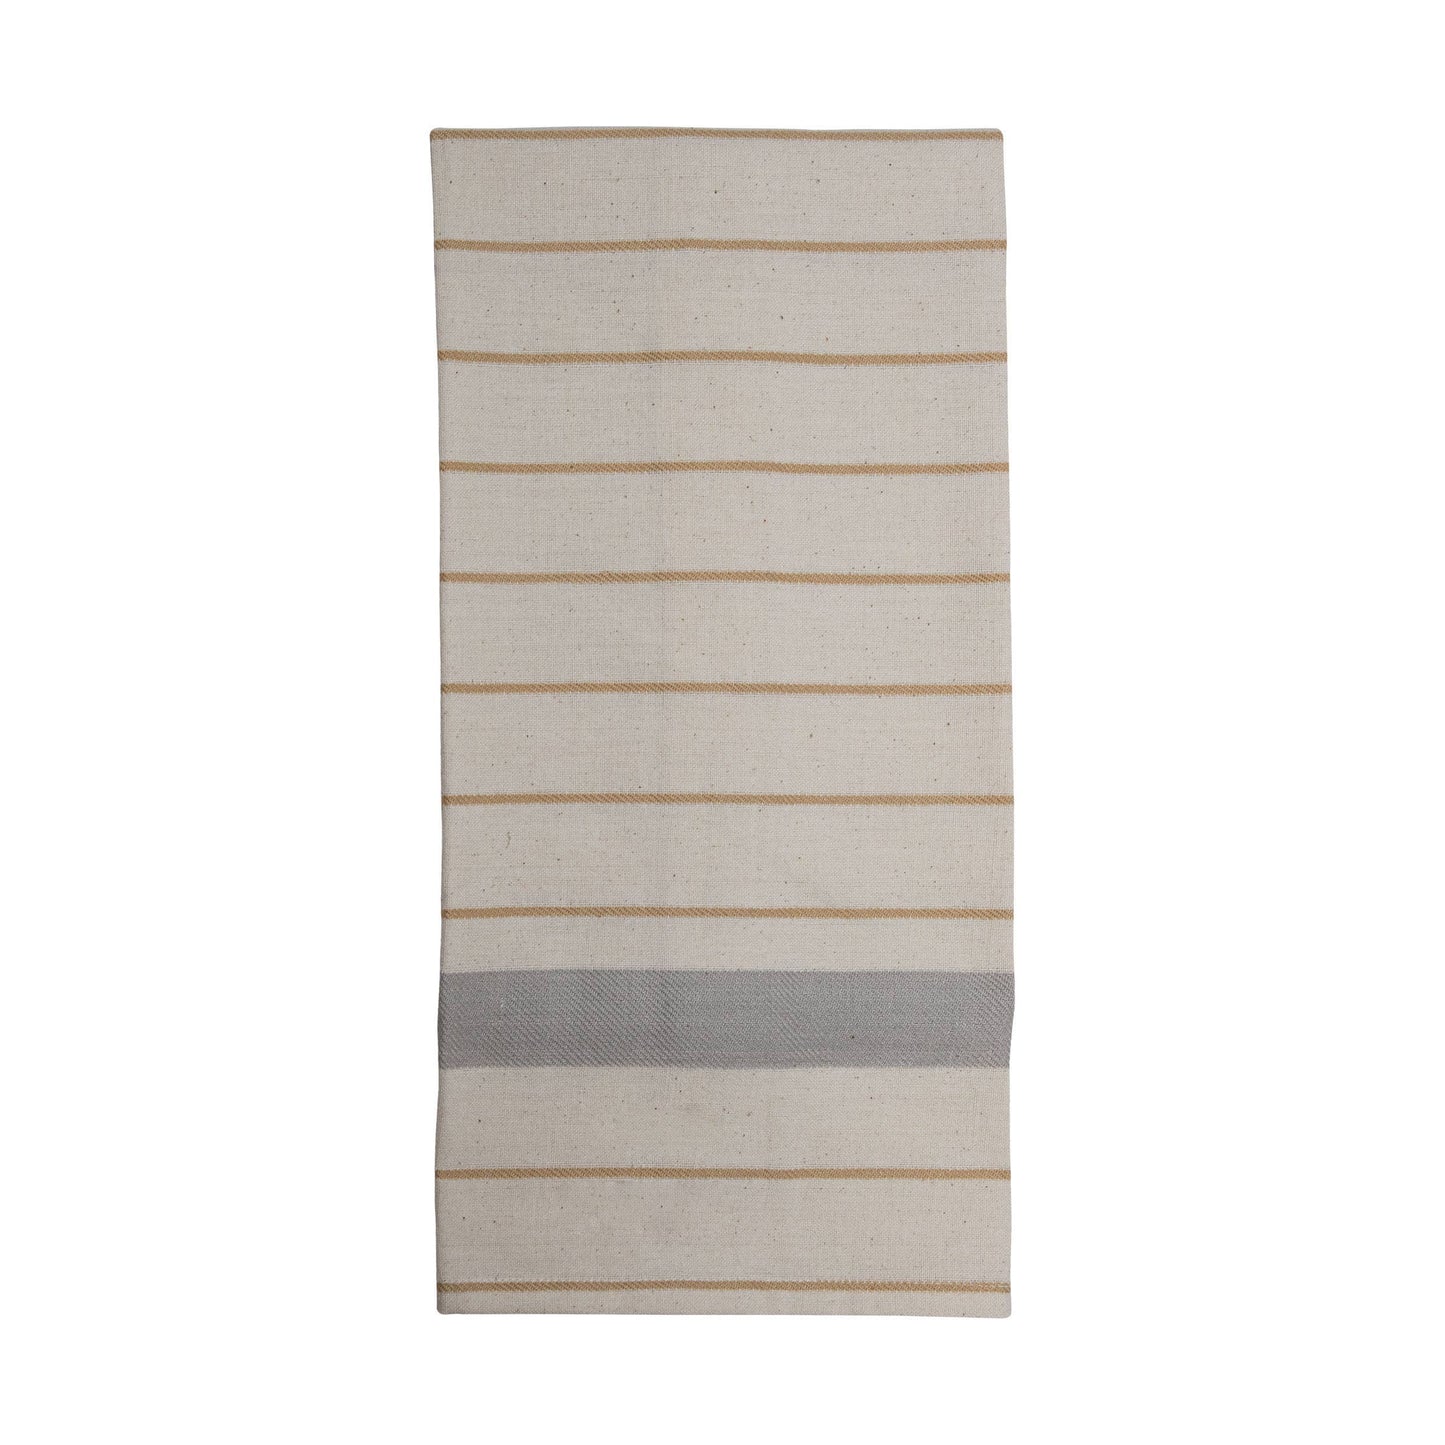 Genevieve Stripe Kitchen Towels -set of 4